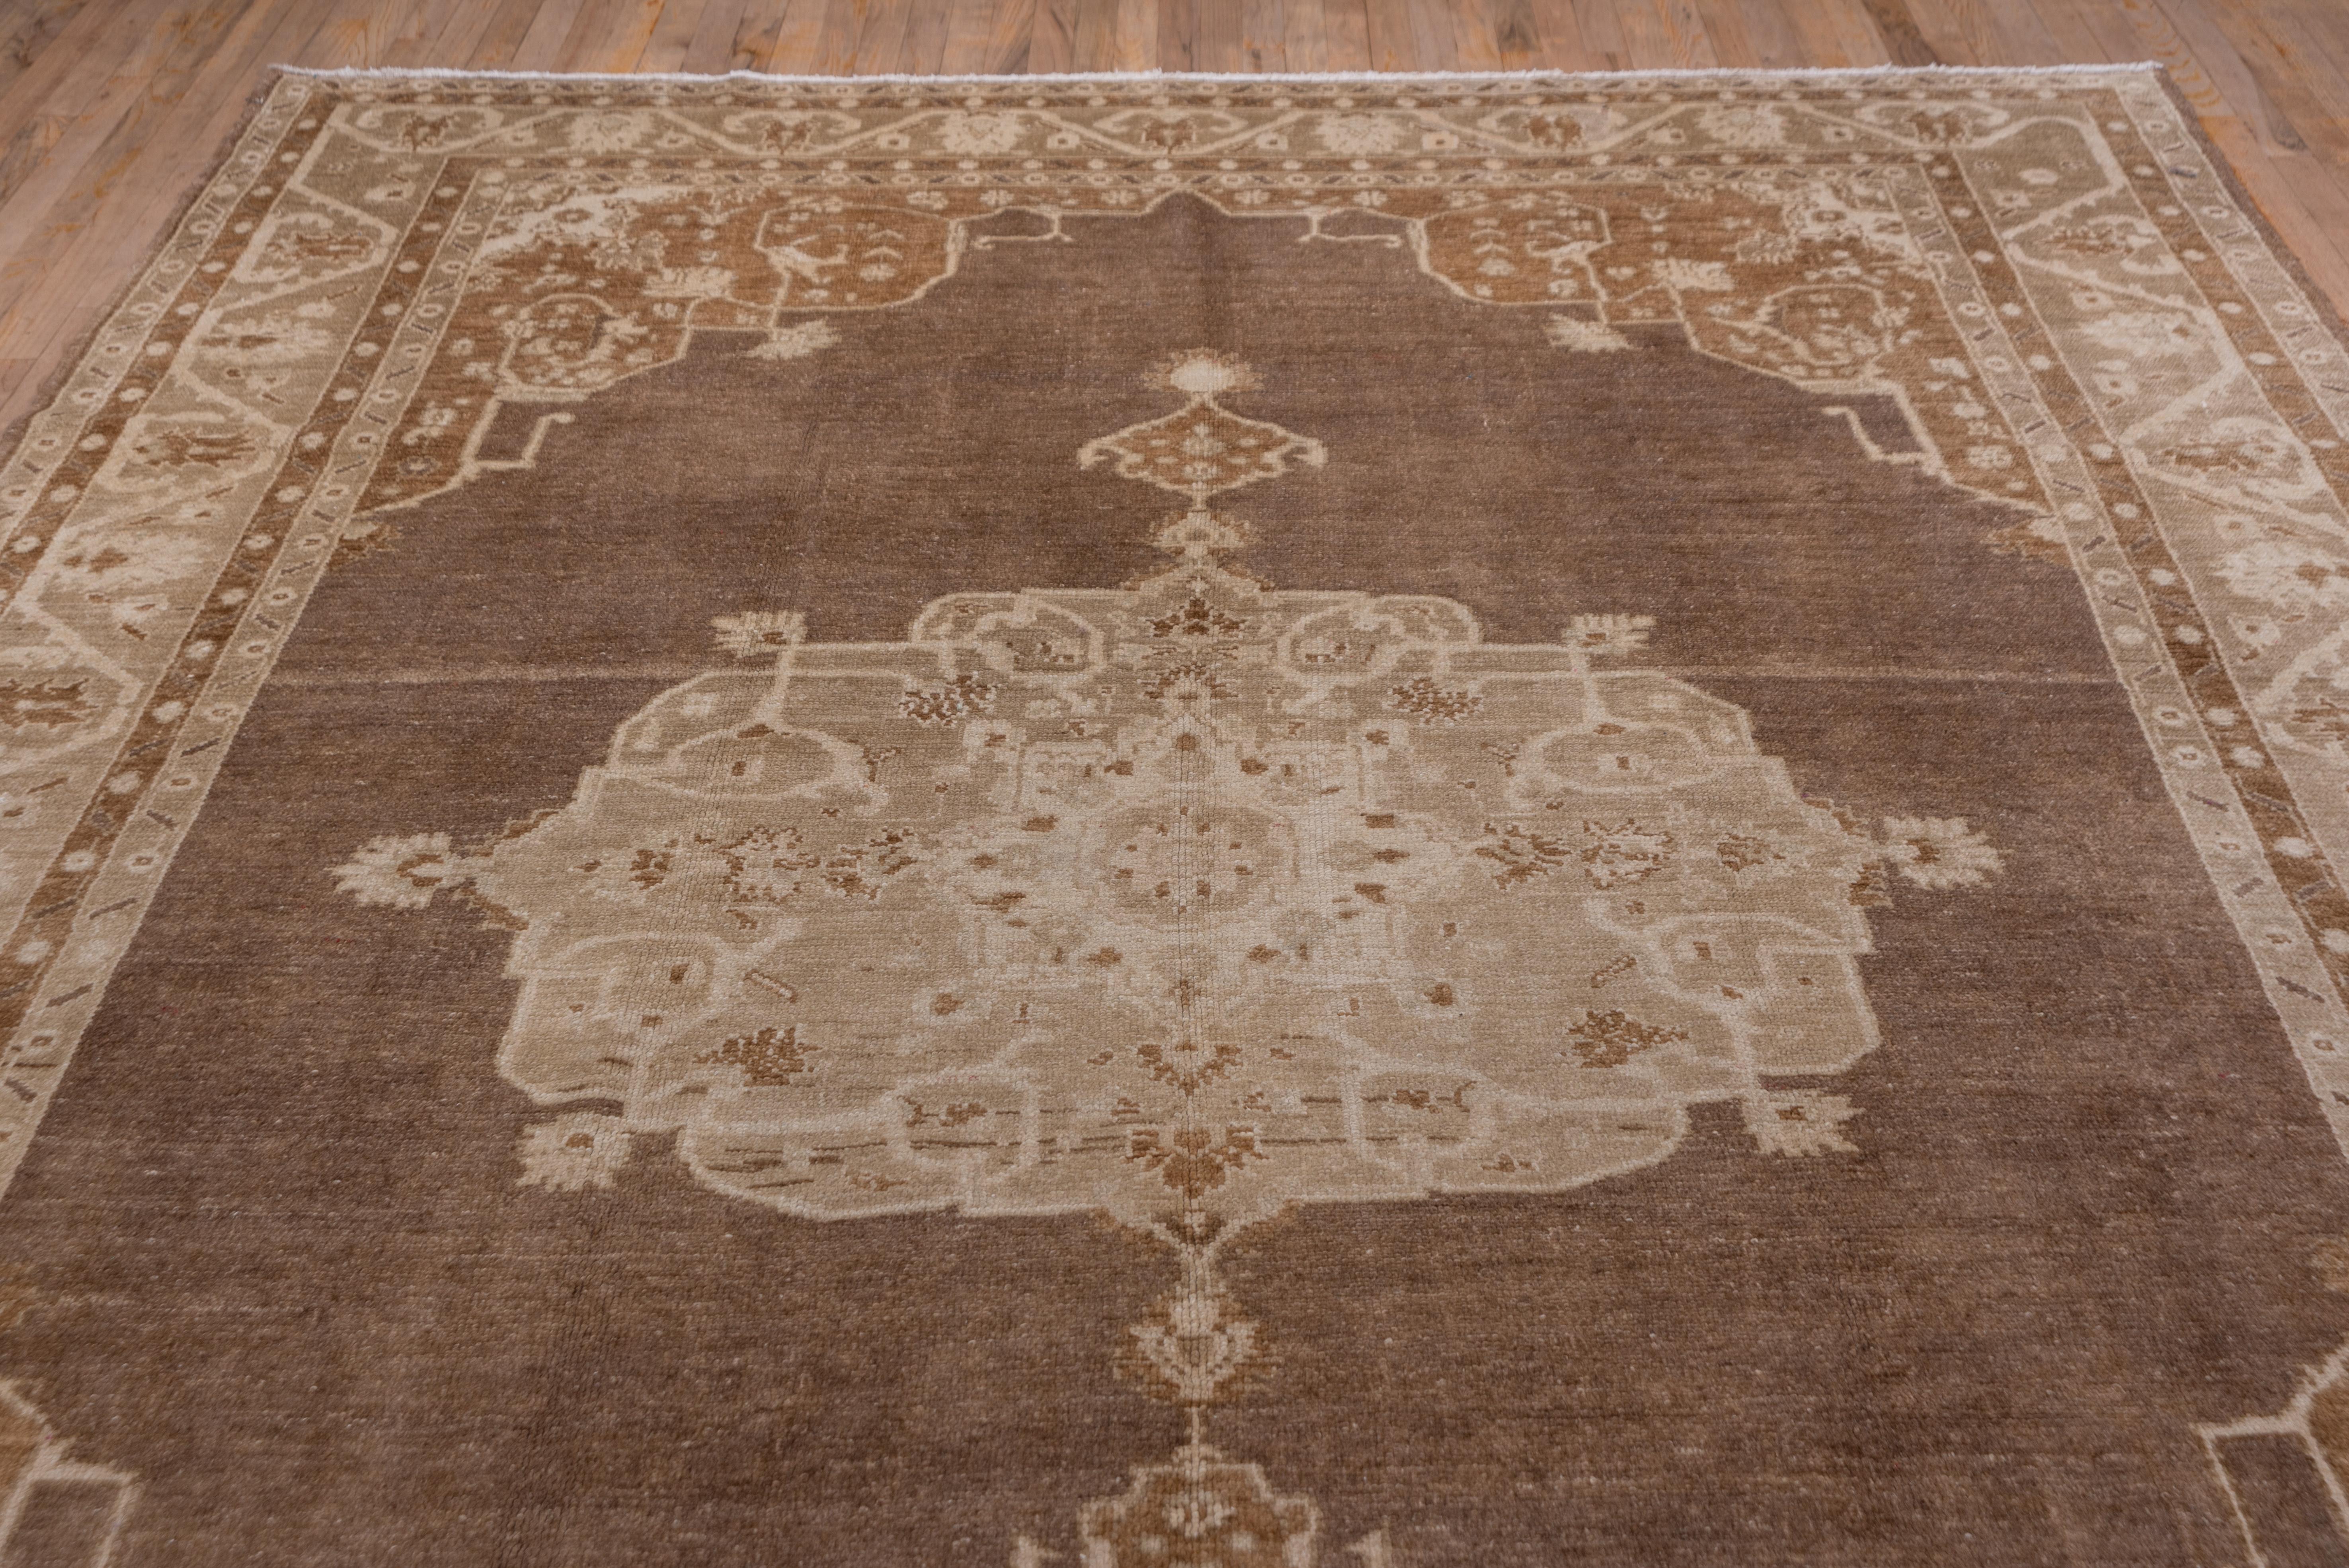 Antique Turkish Oushak Carpet, Brown Field, Light Brown Borders, Circa 1930s For Sale 1